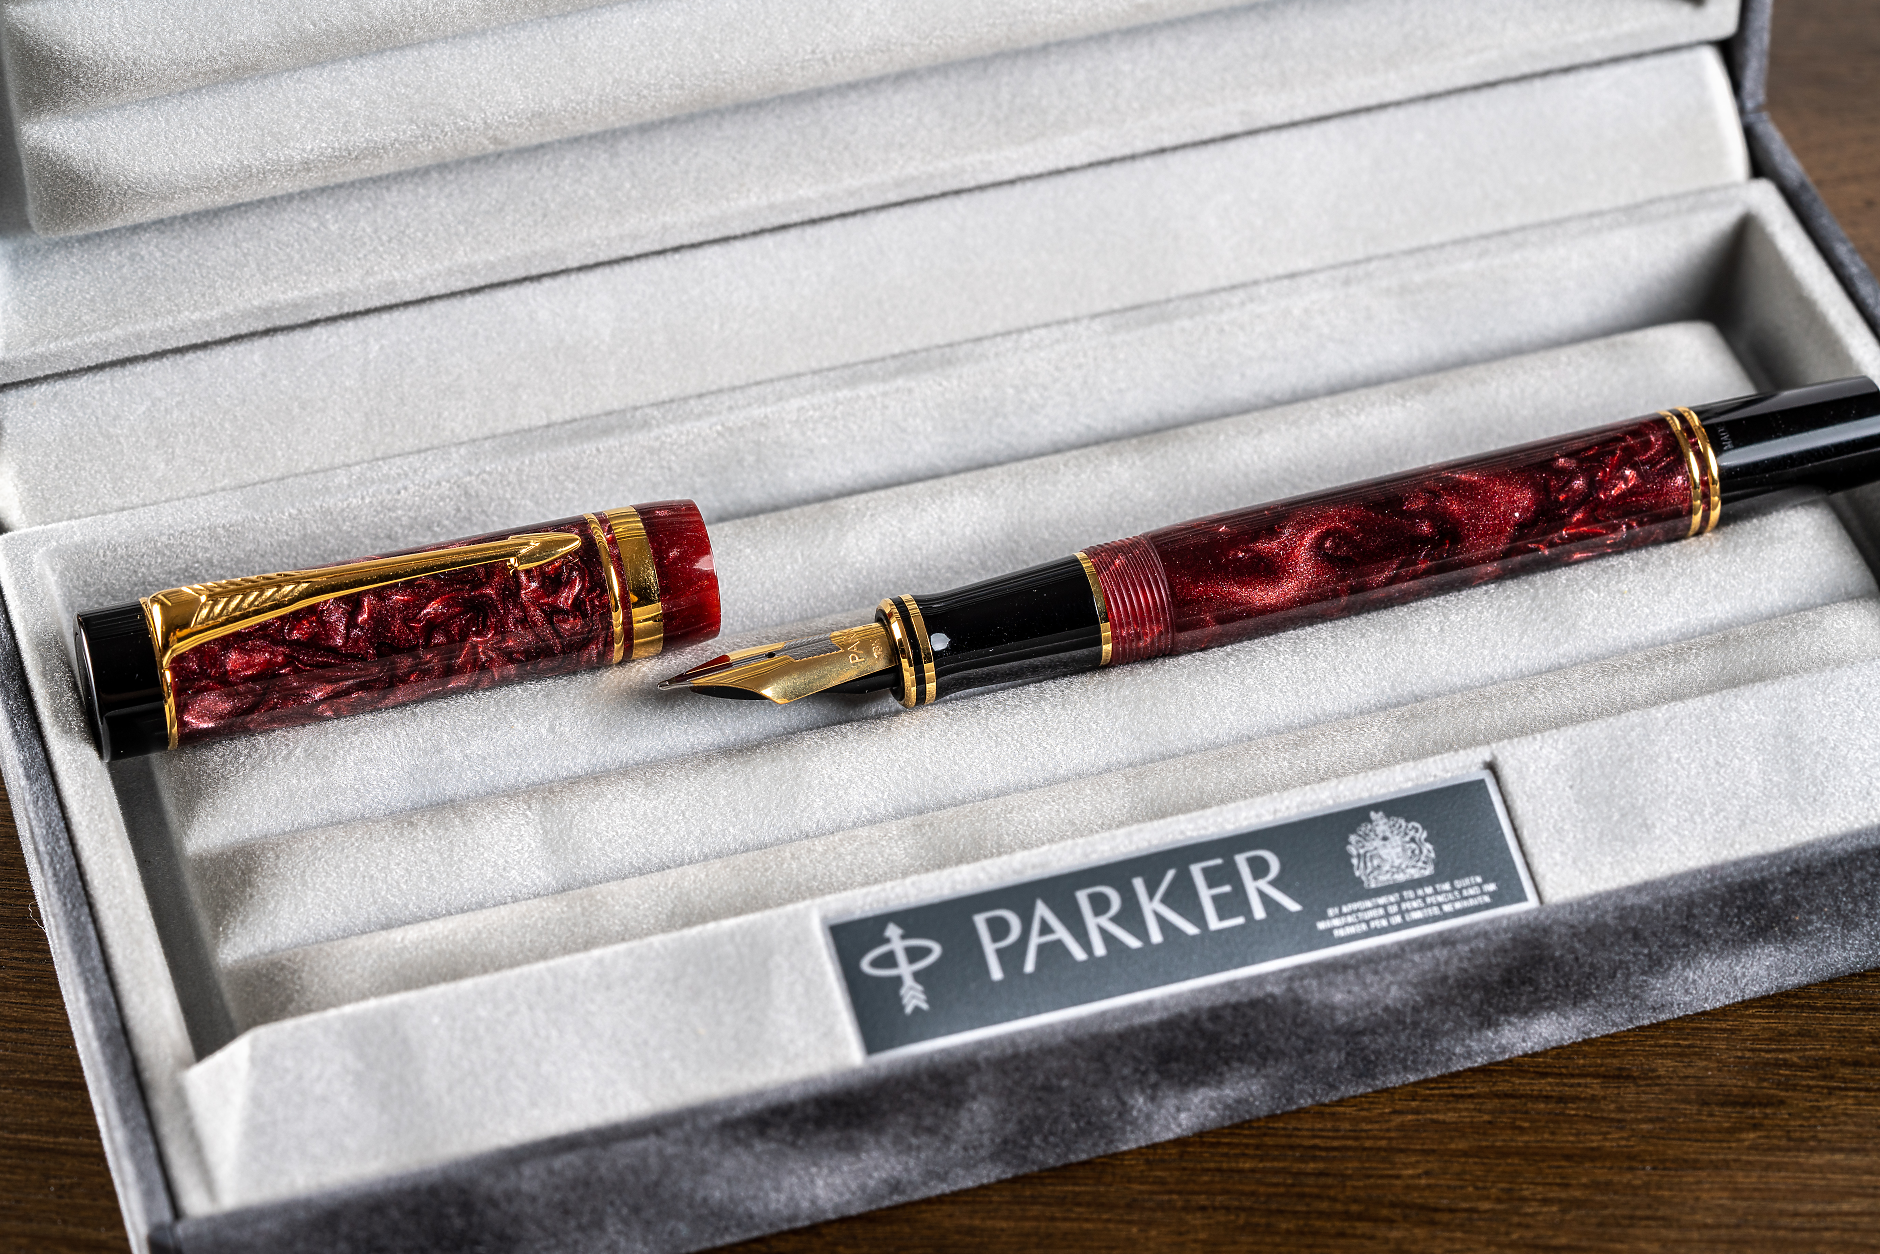 Златна писалка Parker Duofold в цвят бордо. Снимка: Shutterstock